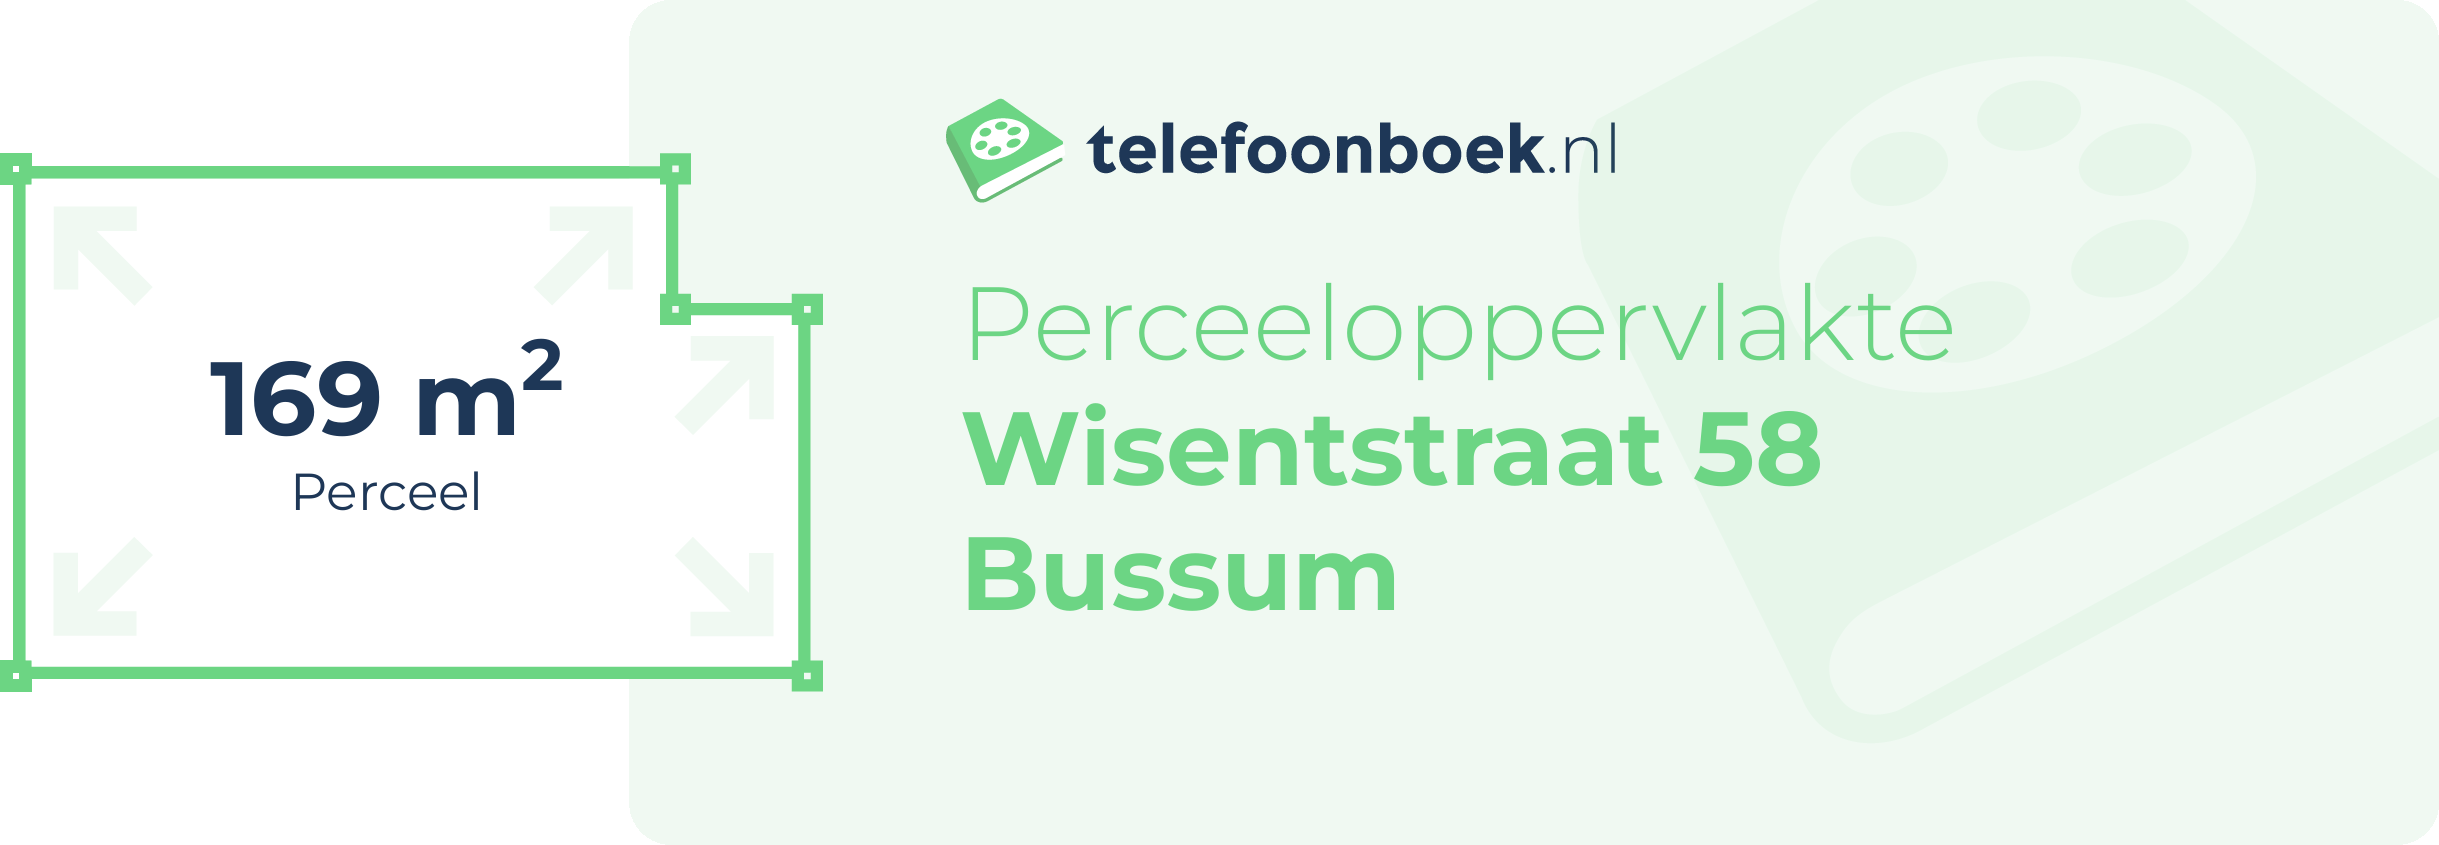 Perceeloppervlakte Wisentstraat 58 Bussum